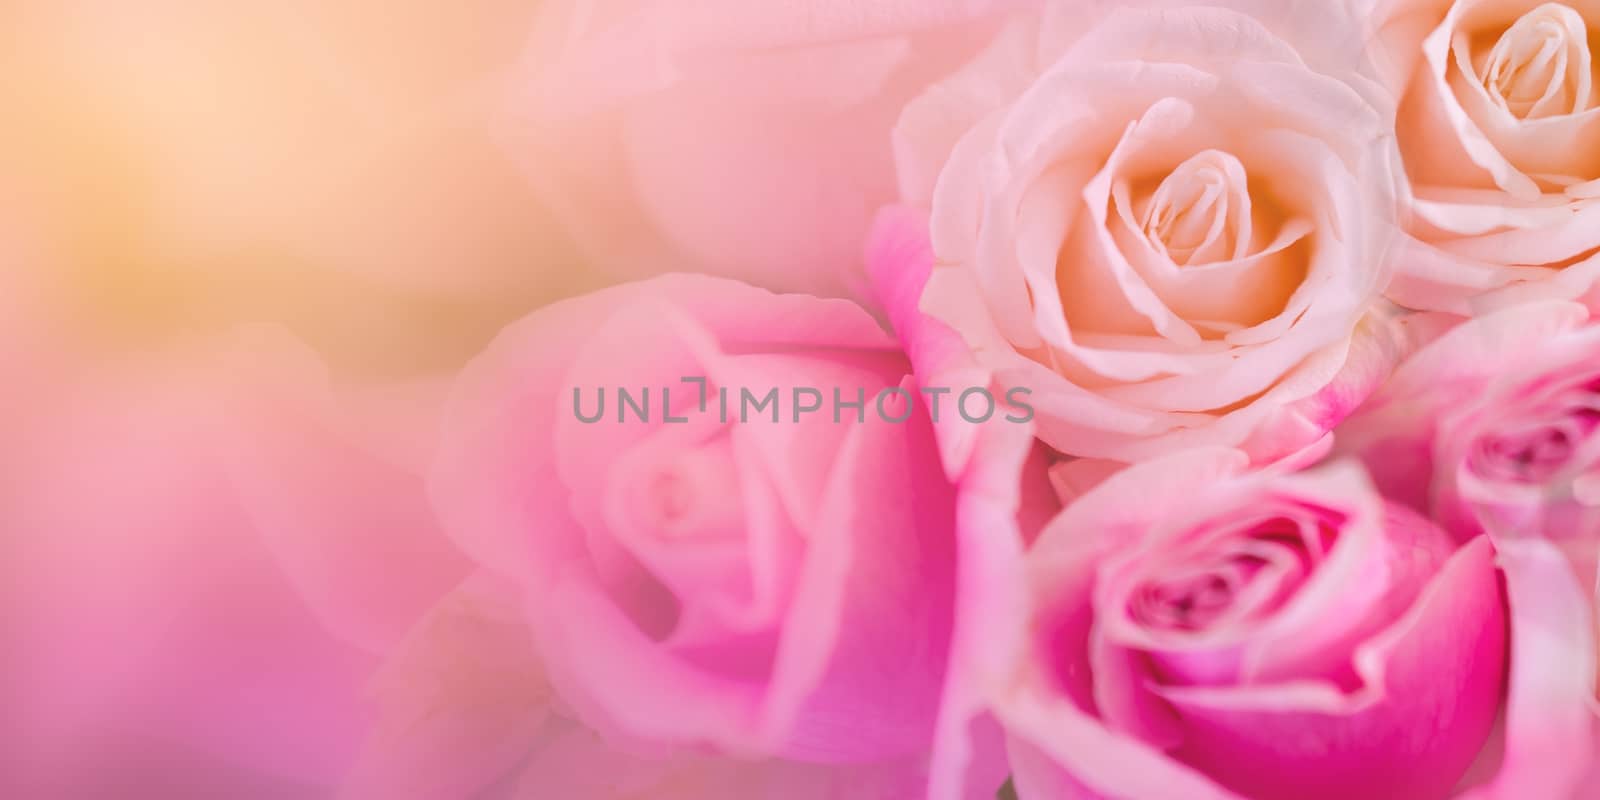 Pink roses Background blur Valentine